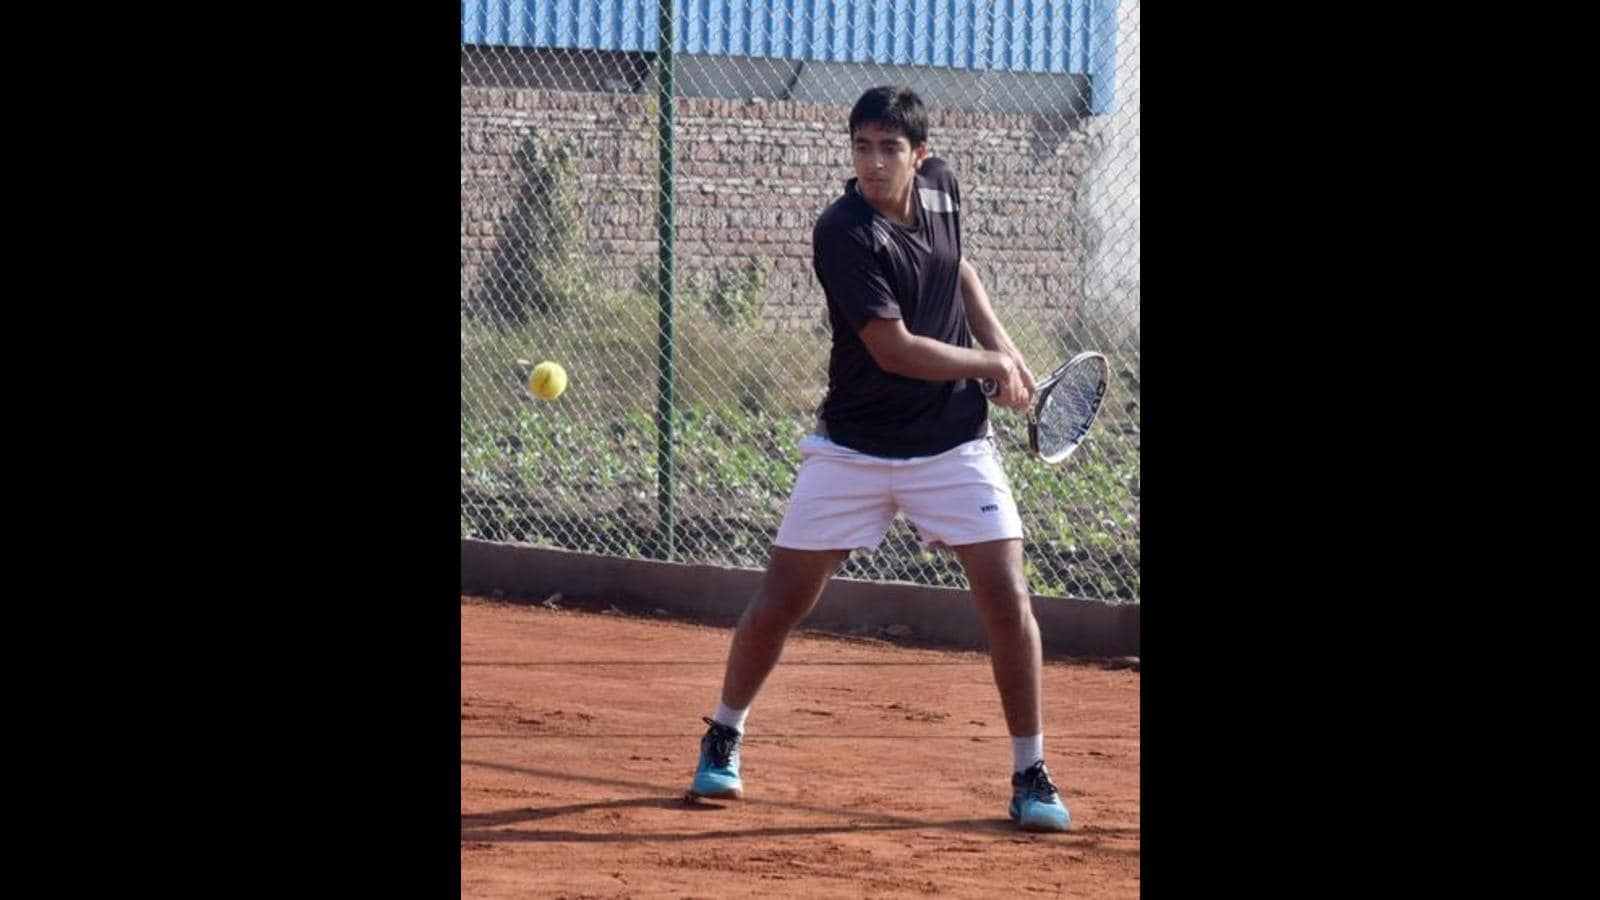 U-16 tennis championship: Krish ousts Savtvik to enter pre-quarterfinals